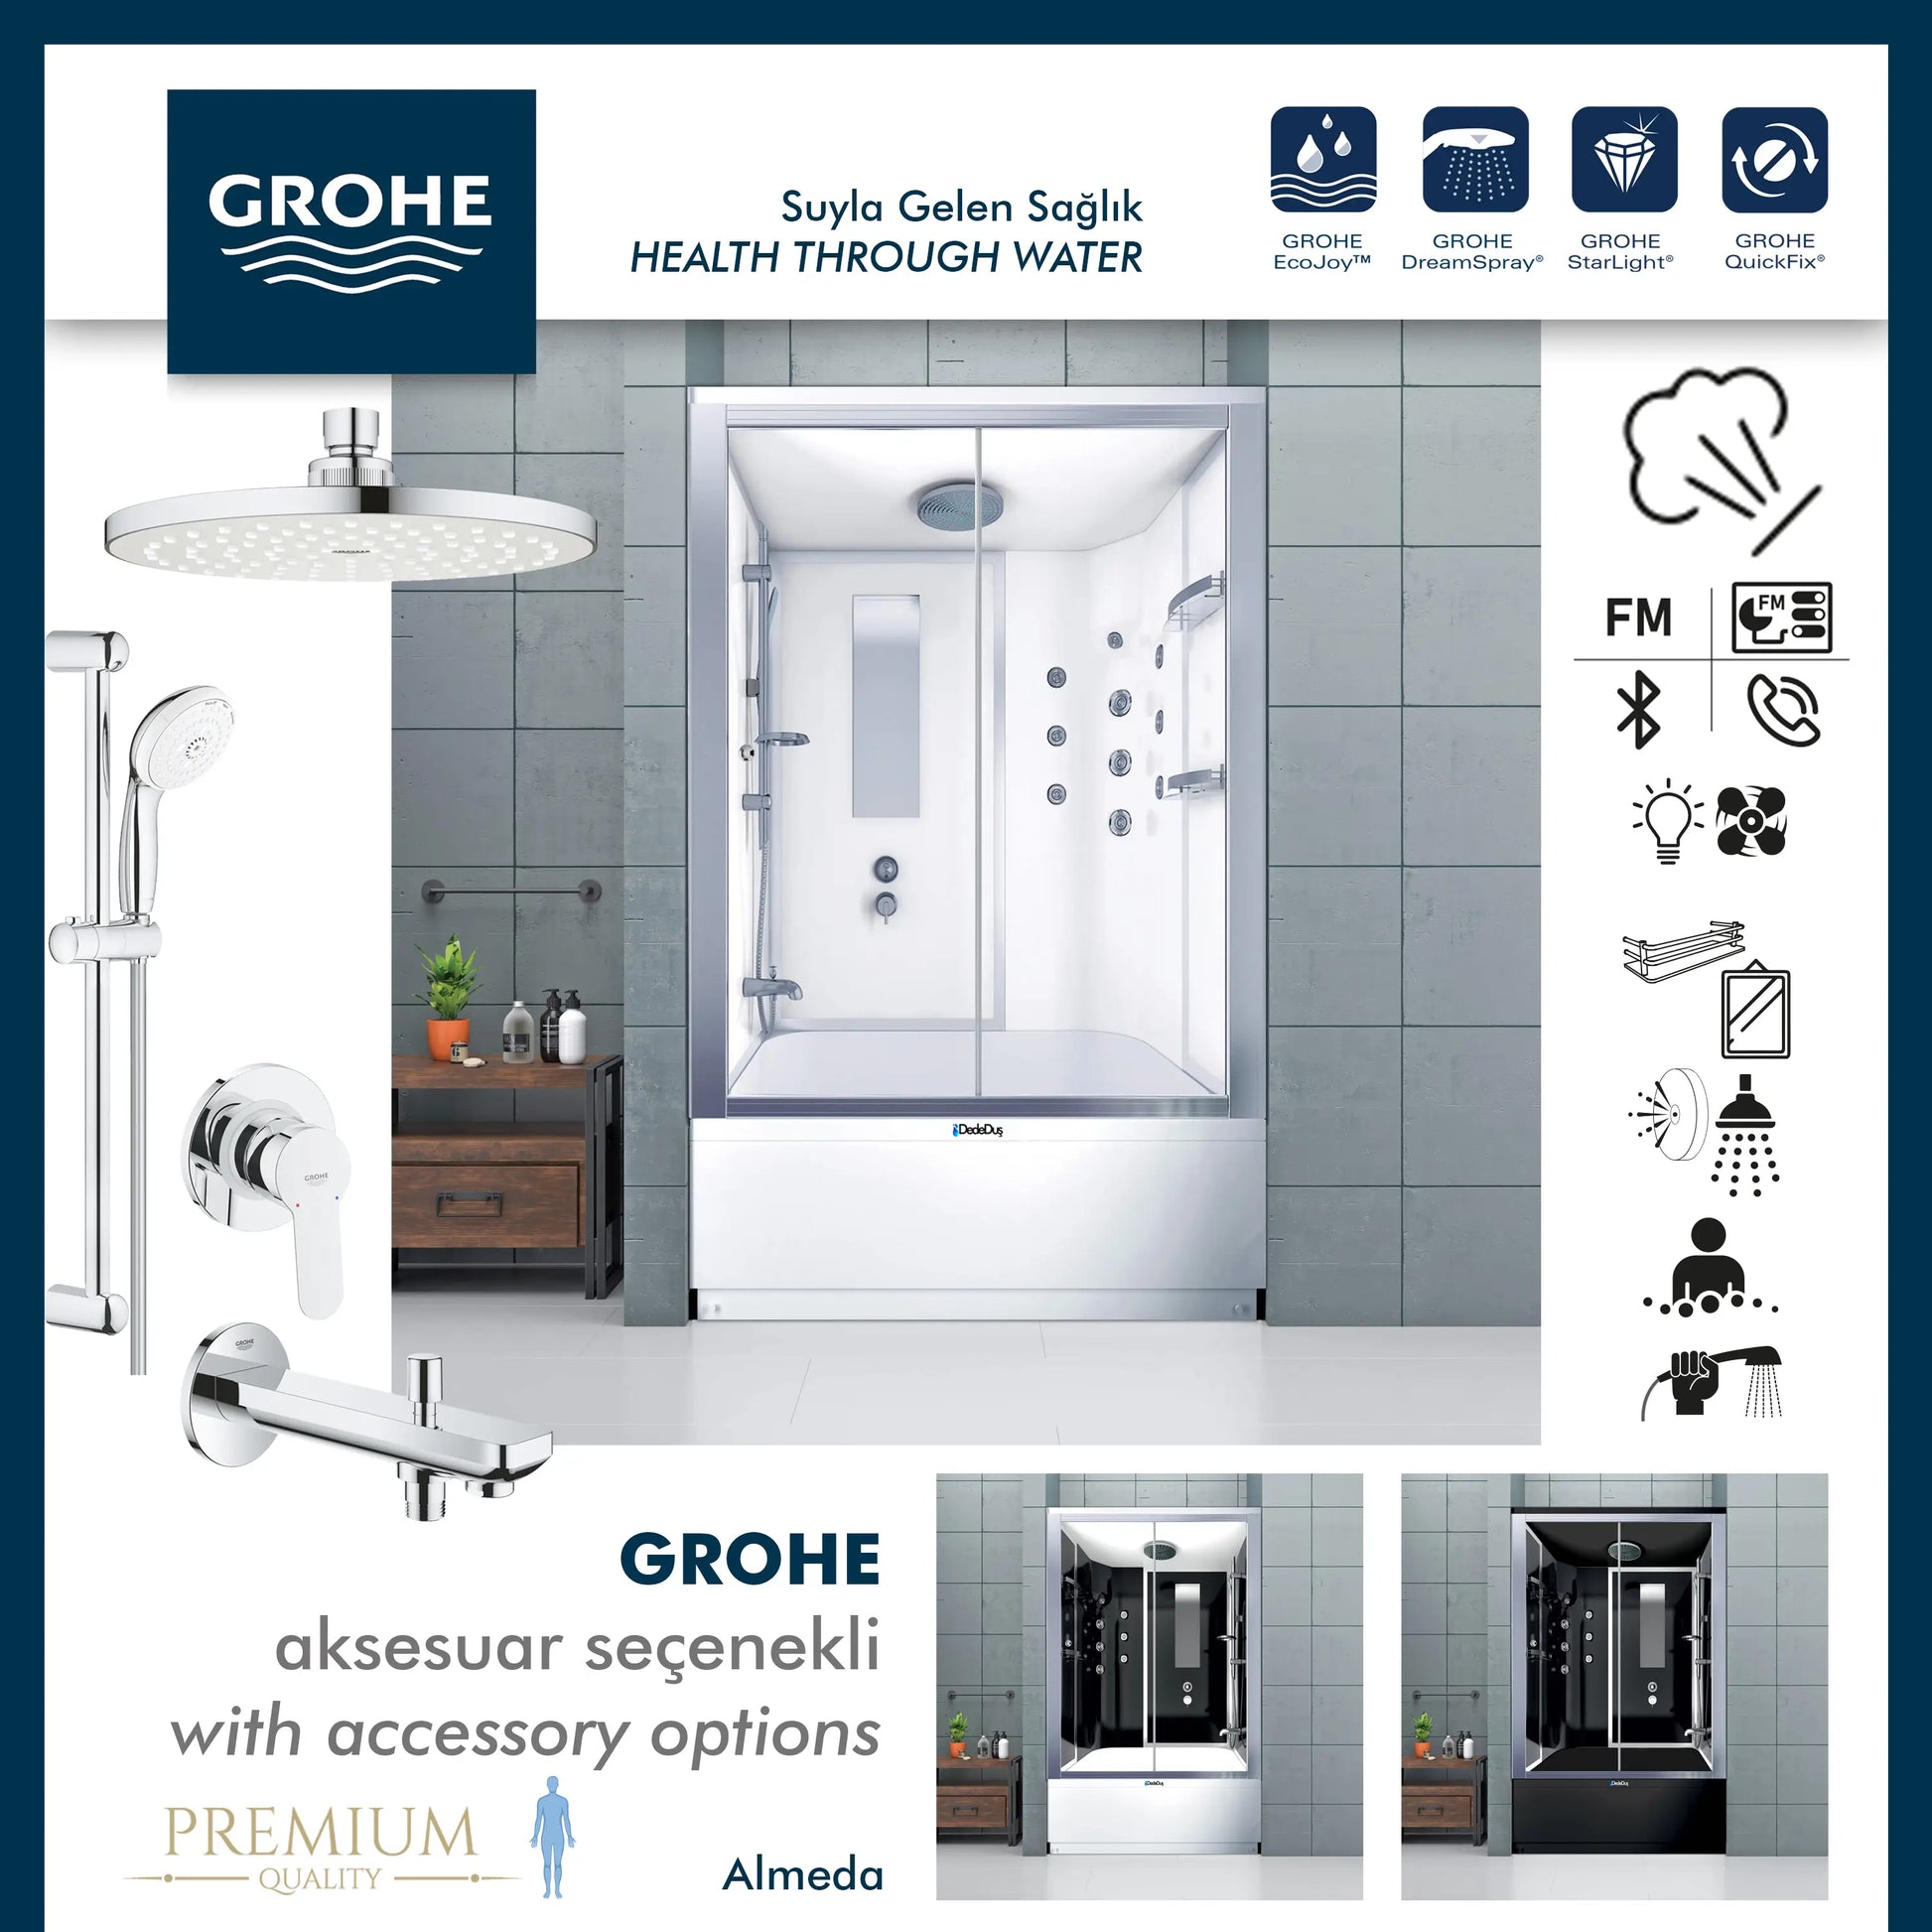 Grohe | Almeda Kompakt Duş Sistemi, müzikli, buharlı, masajlı, Bluetooth bağlantılı.